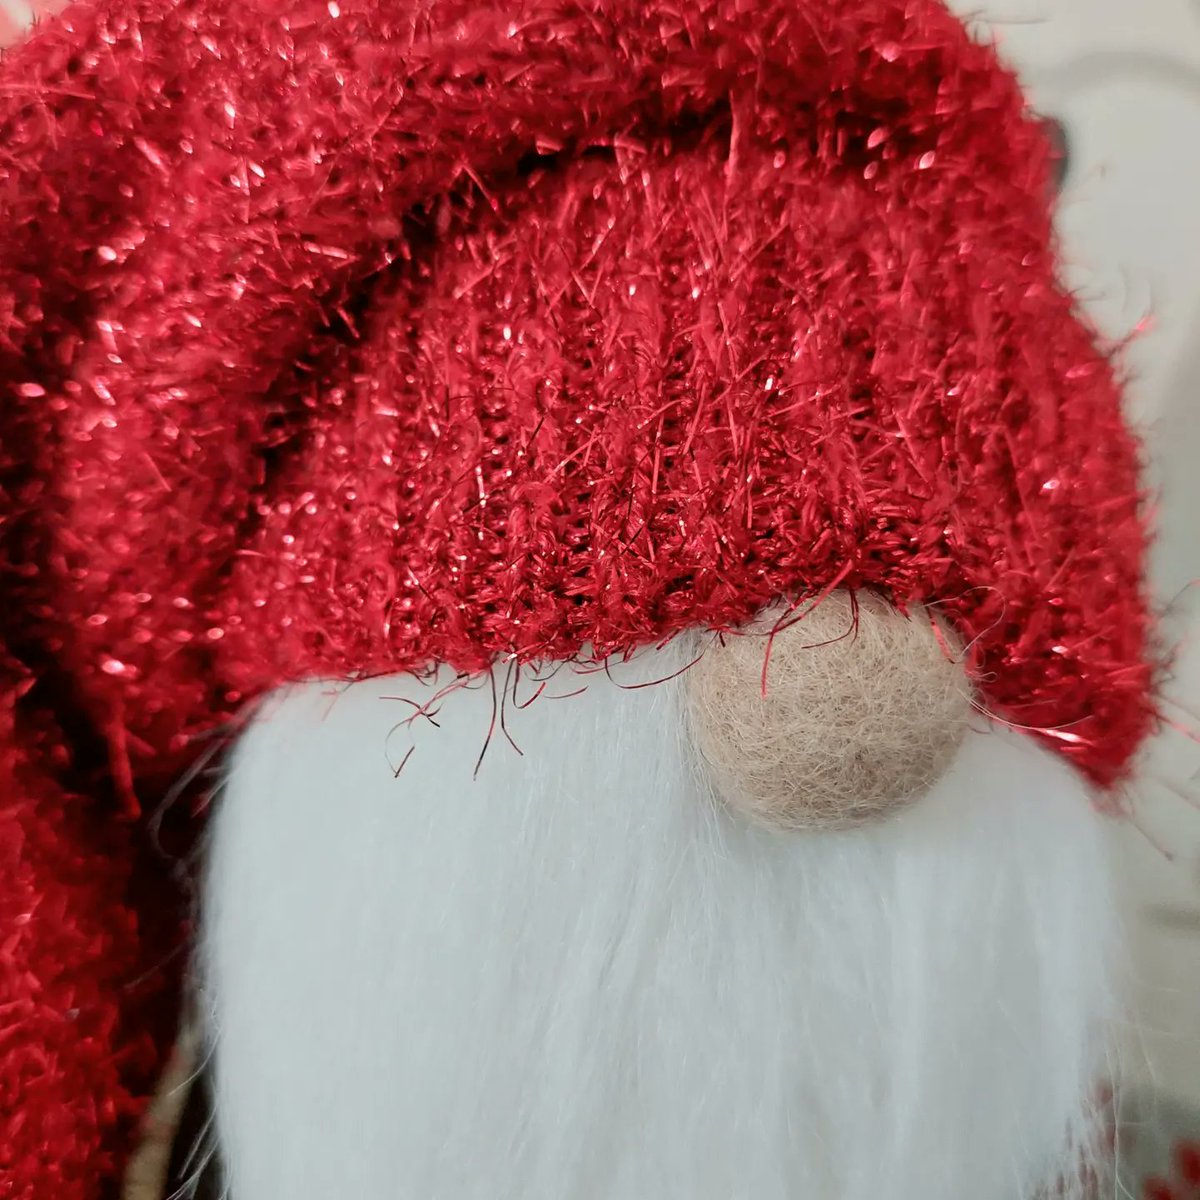 Hello! #HandmadeHour hope everyone is well 🎅 sharing one of my gnomes with you tonight x #gnomes #gonks #handmadegnome #Christmasgnomes #handmadechistmas #Christmasdecorations #redhats #tinseltime #shopsmall #indiebiz #craftbiz #madeinyorkshire #Santa #gnomedecorations